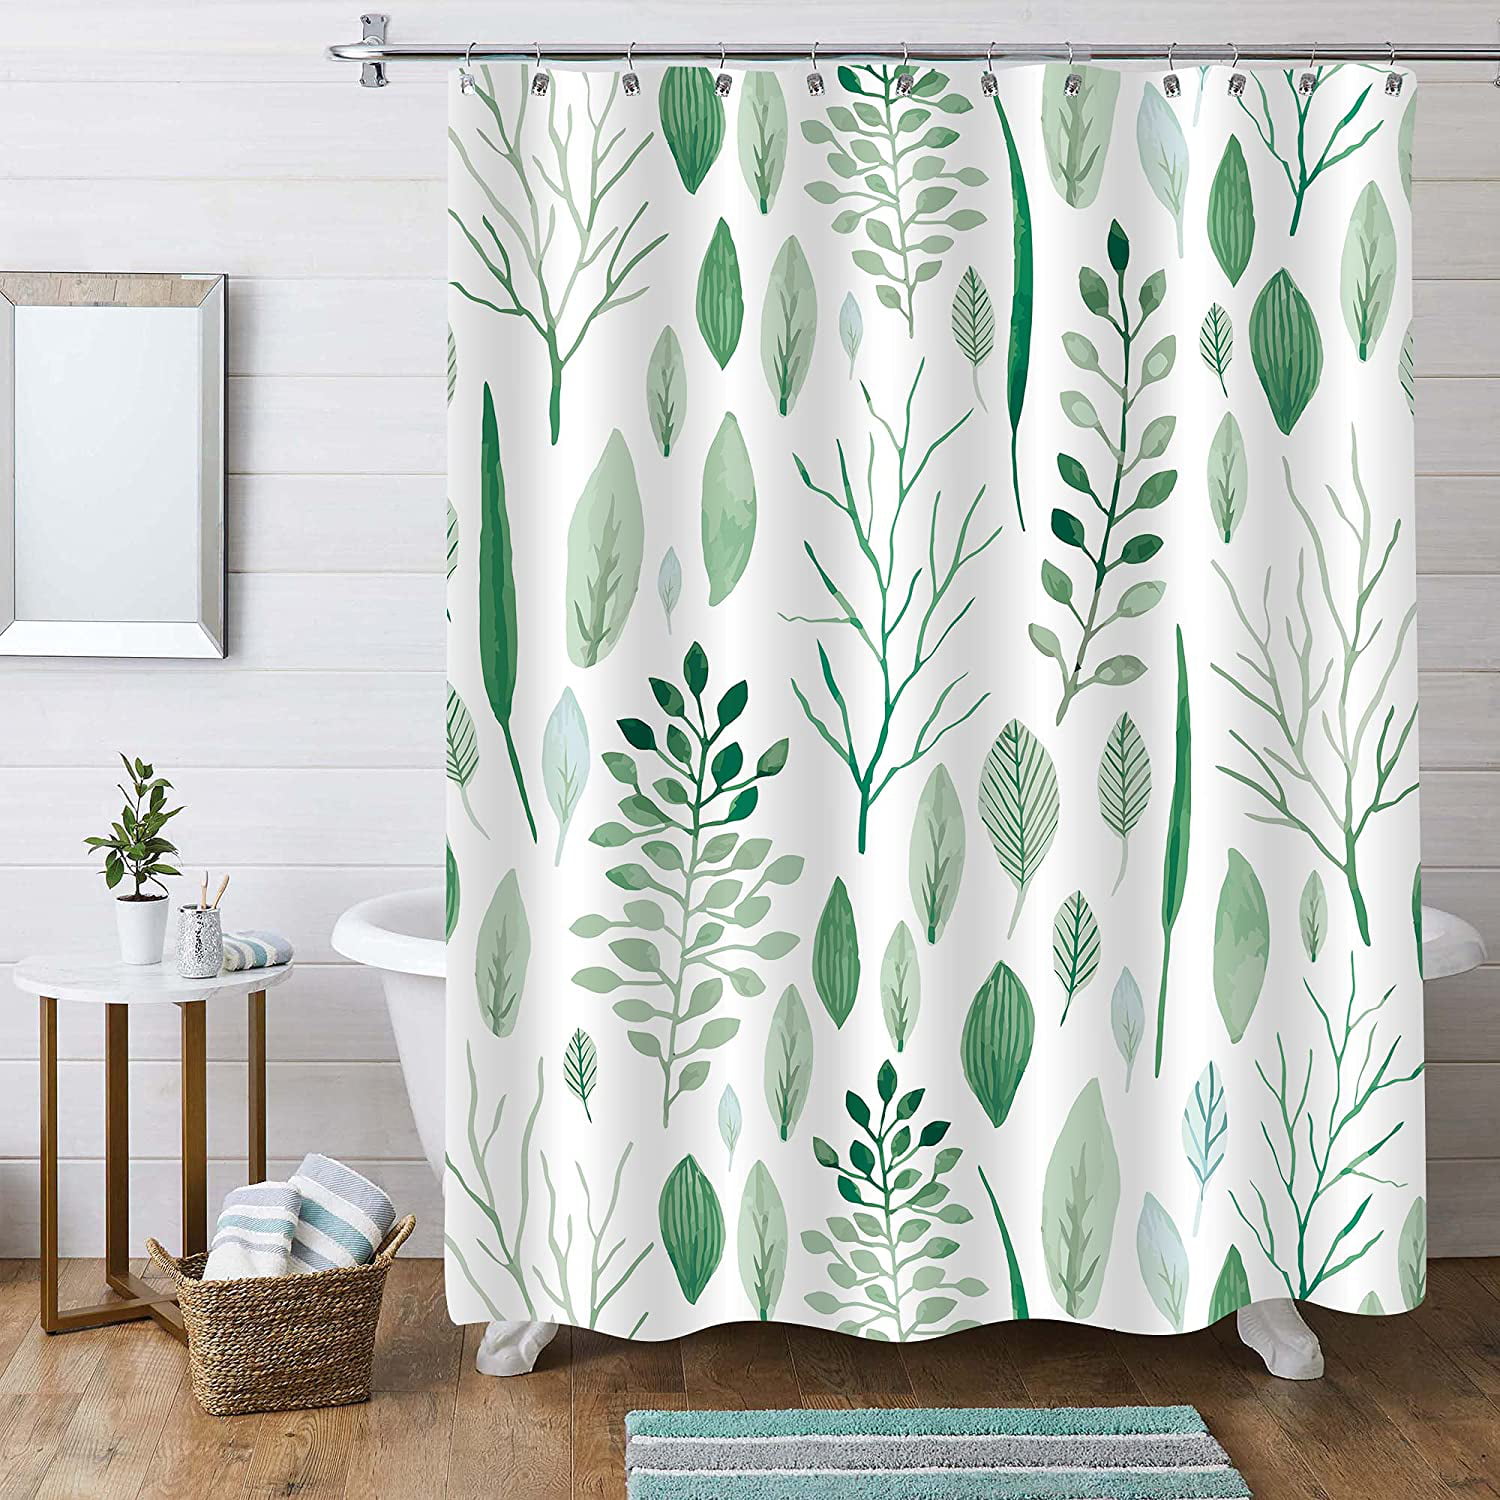 Green Cactus Wood Wall Shower Curtain Liner Bathroom Mat Waterproof Fabric Hooks 